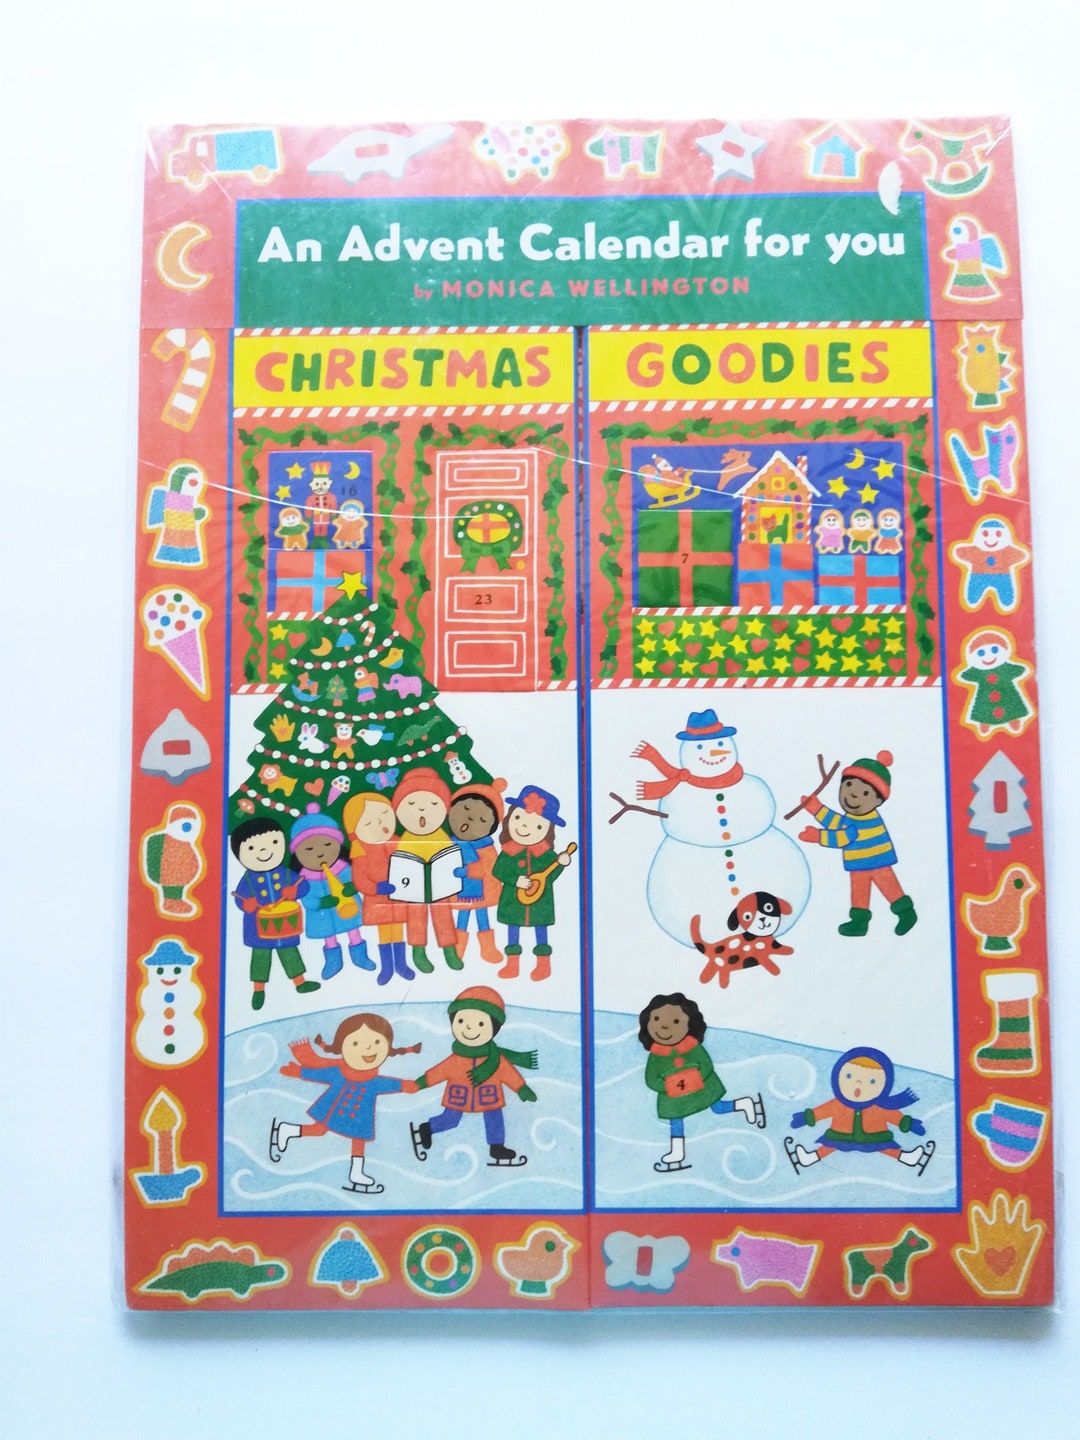 Counting to Christmas: An Advent Calendar Treasury